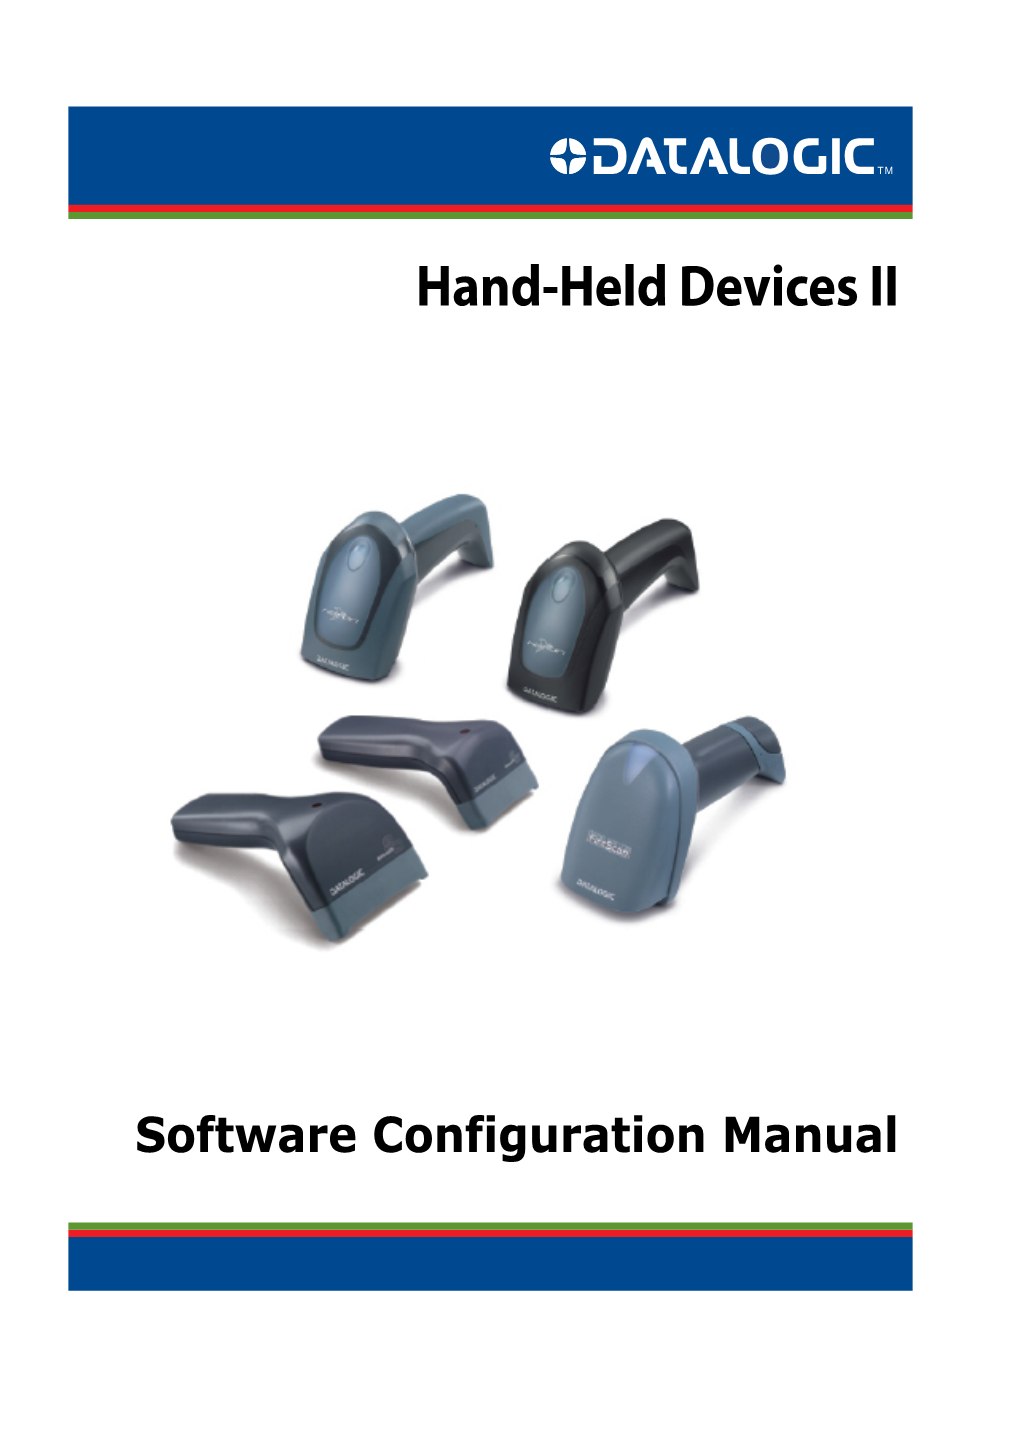 Hand-Held Devices II